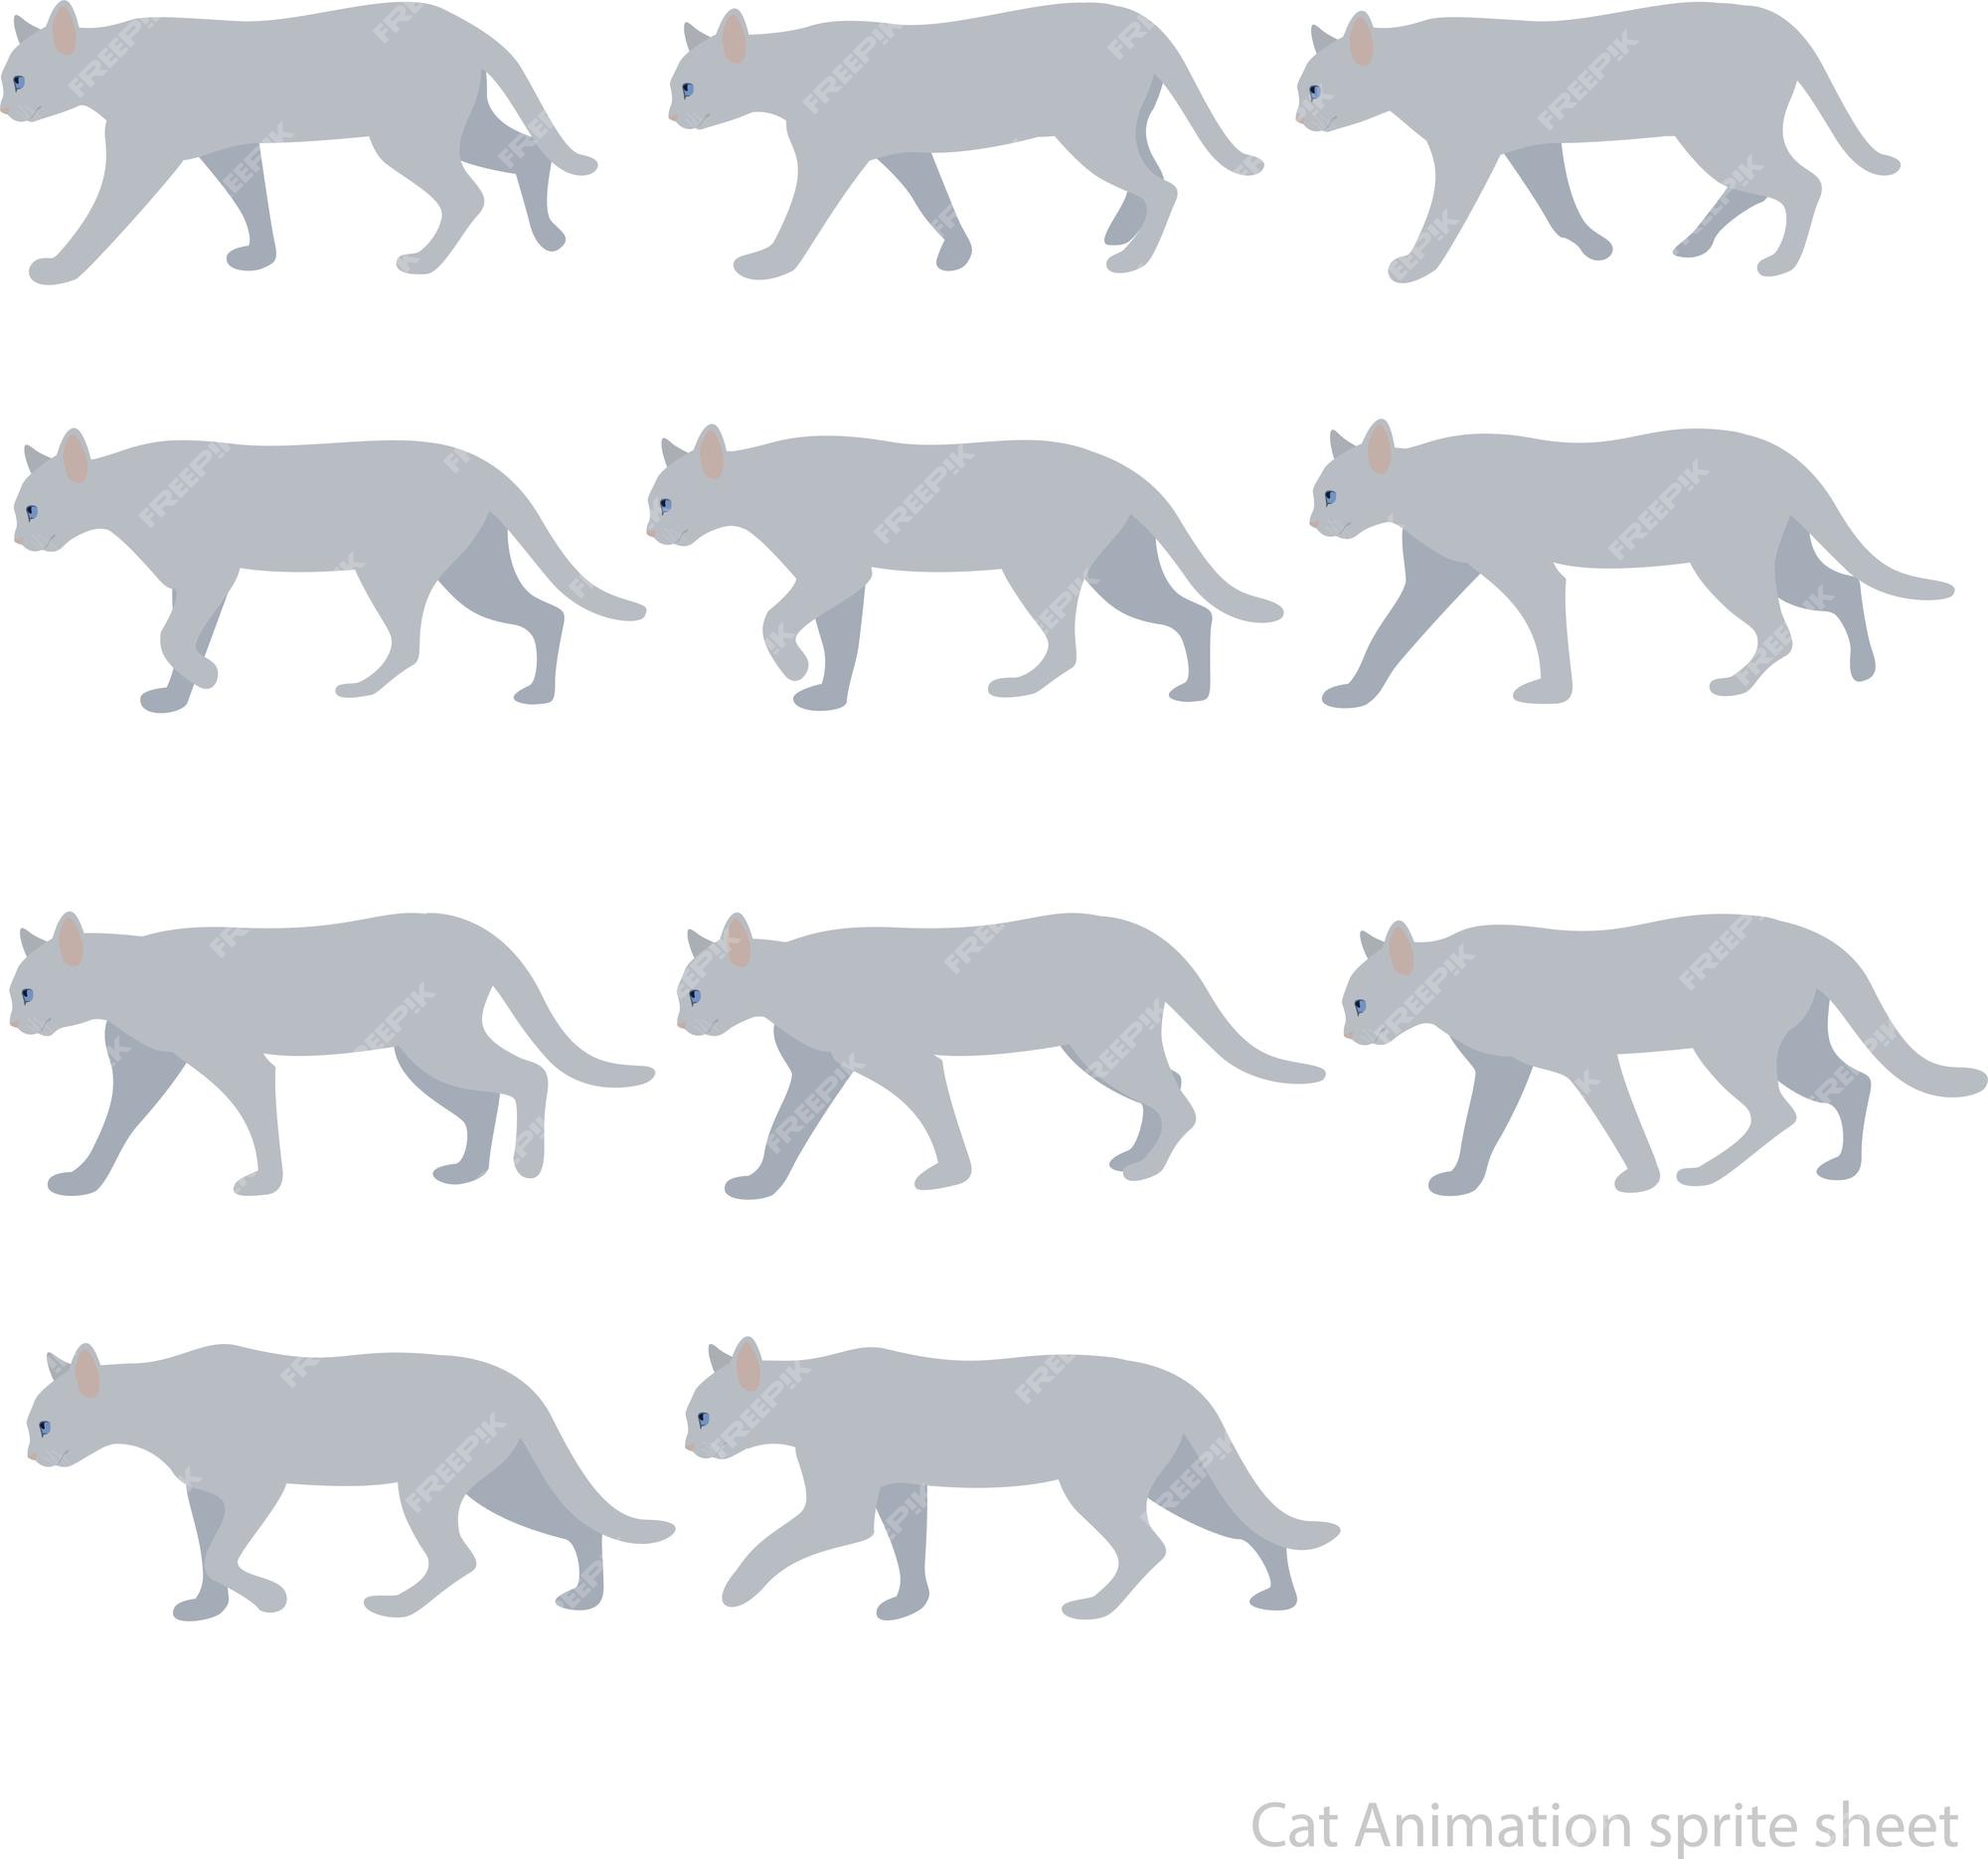 Premium Vector | Cat walk - animation sprite sheet, walk cycle animation  sequence, animation frames